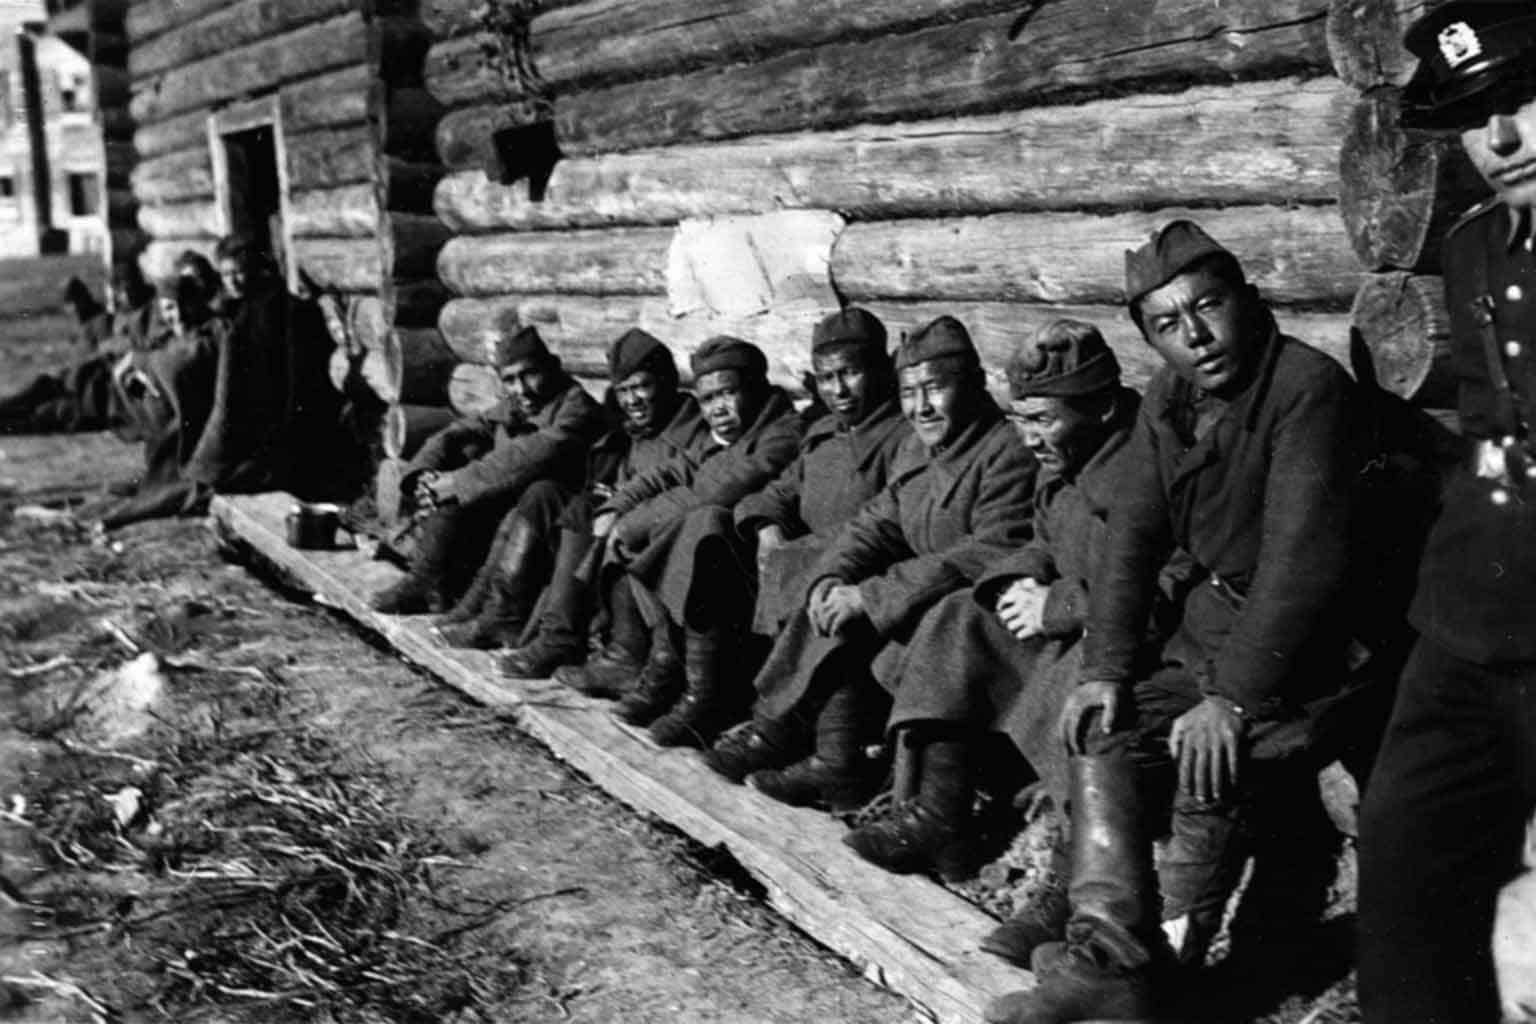 The Soviet prisoners of war